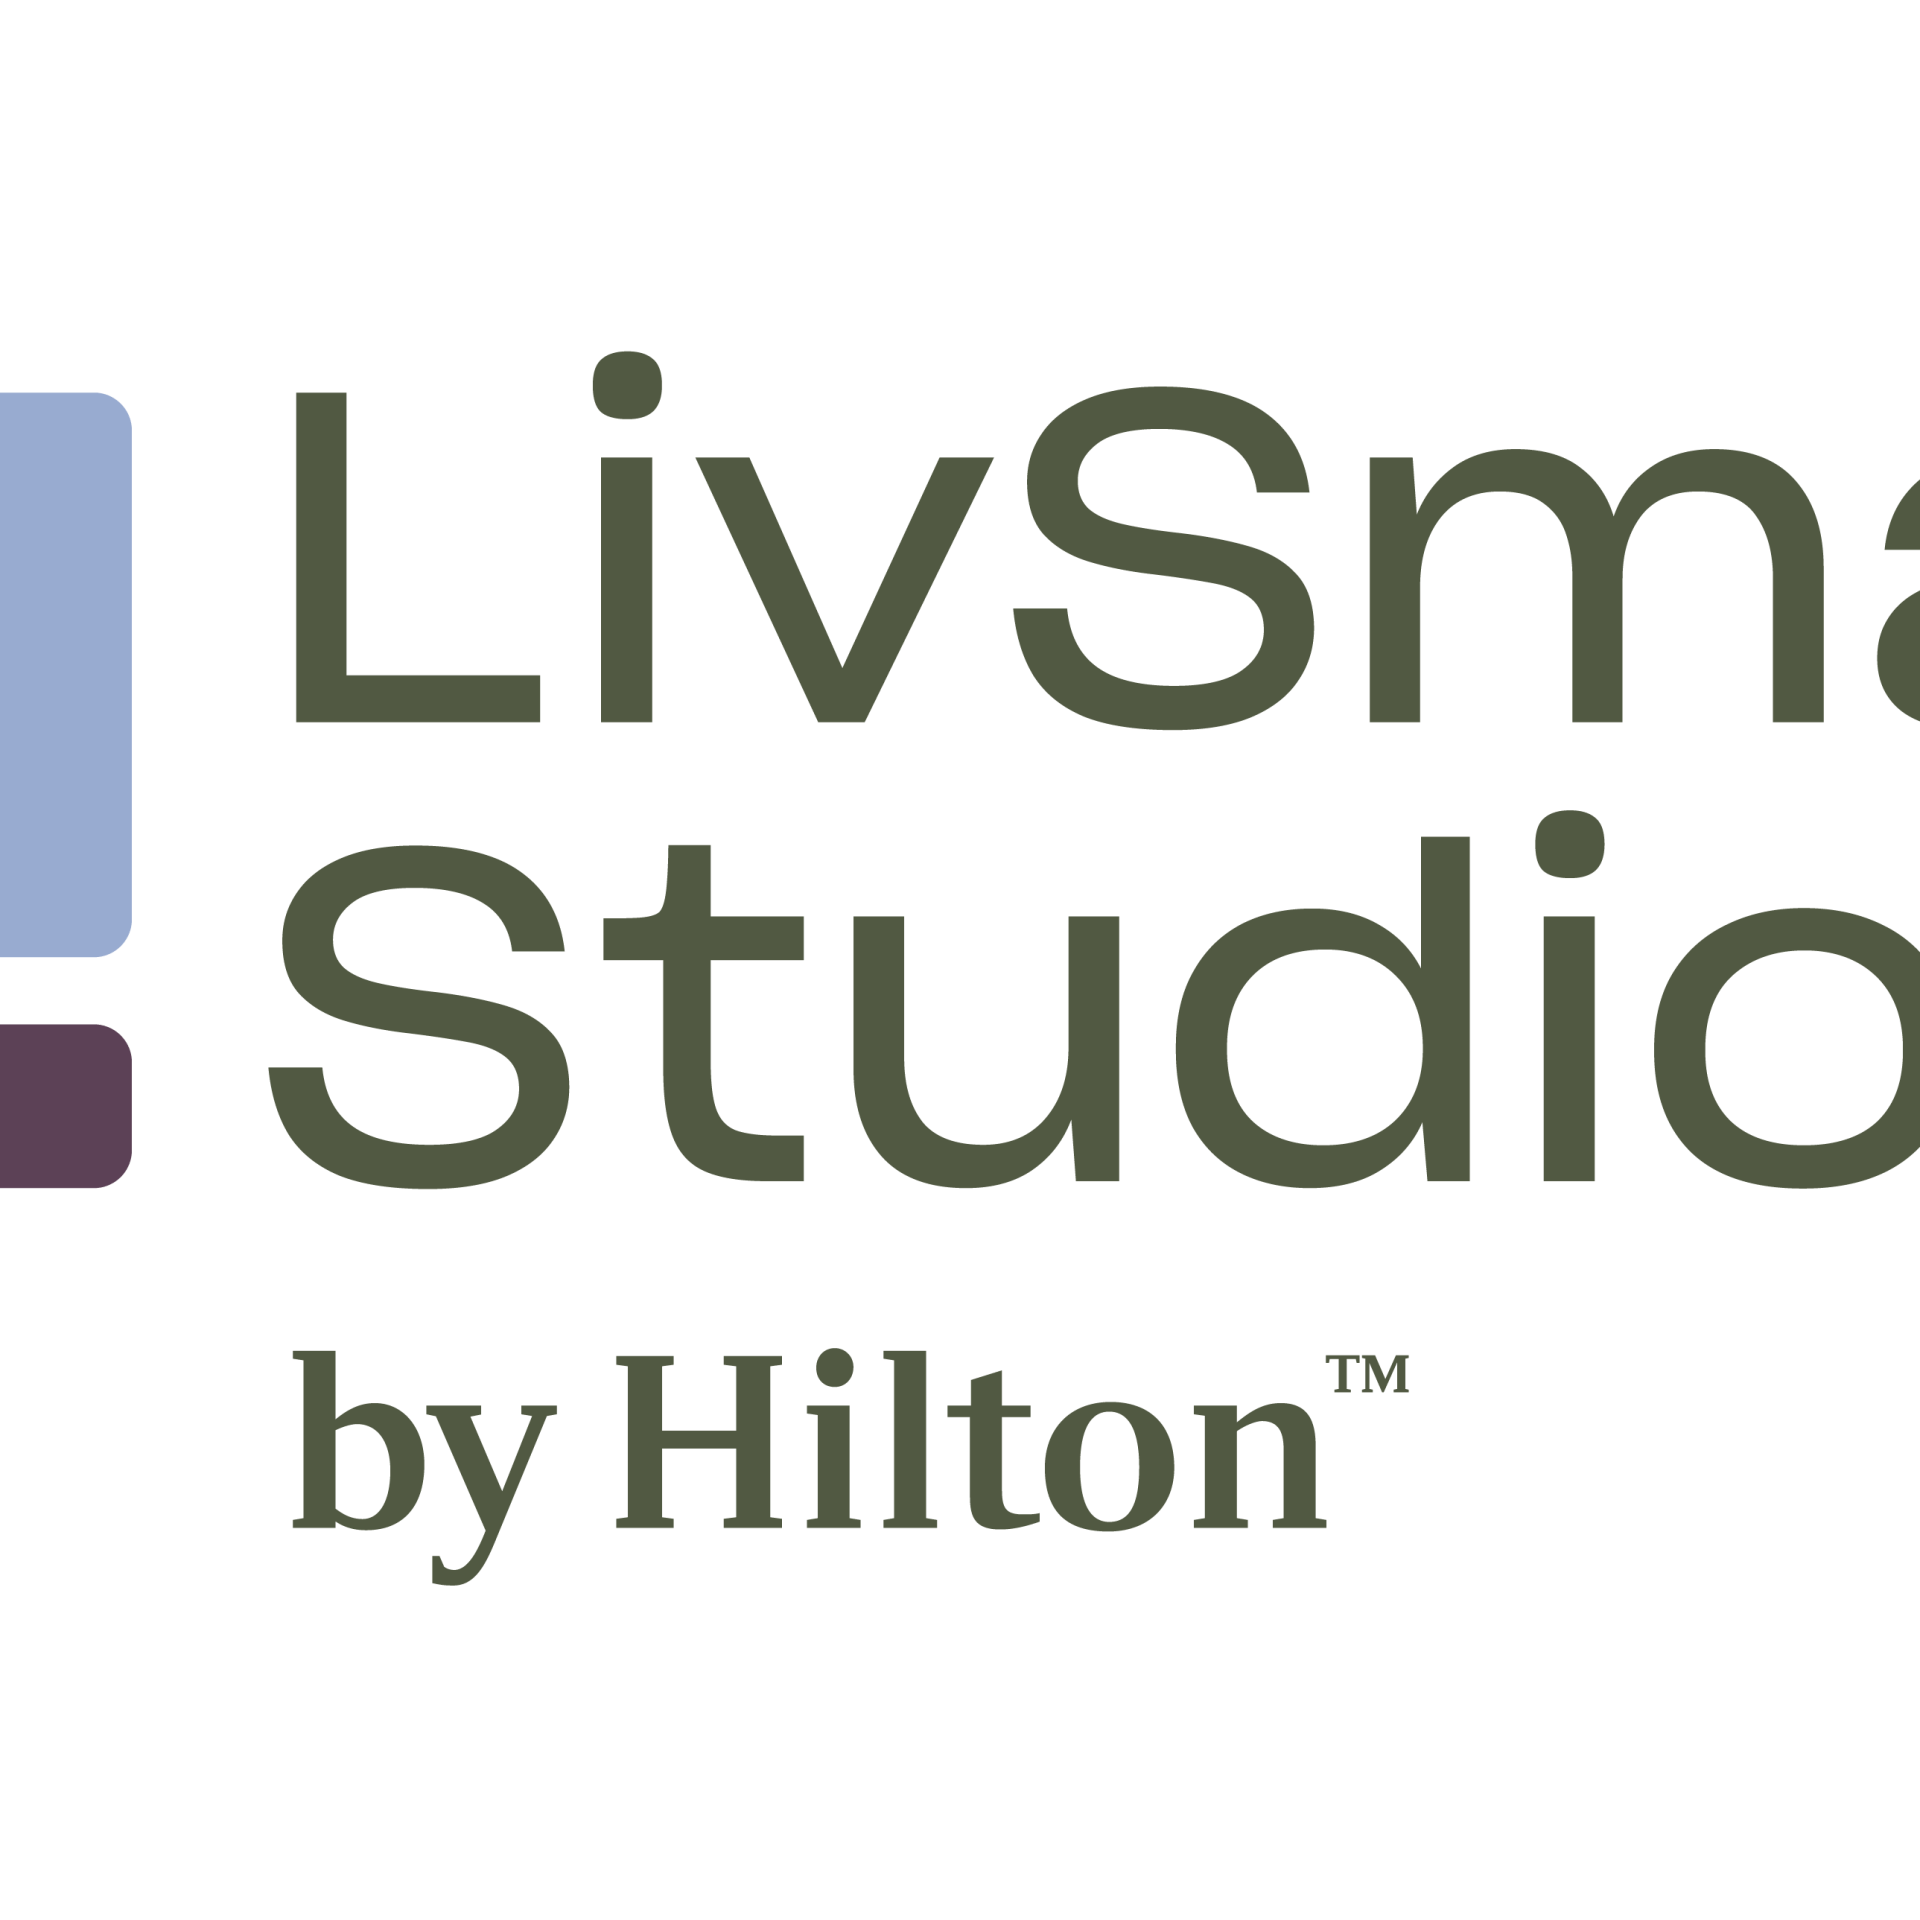 LivSmart Studios by Hilton - Logo - Full Color